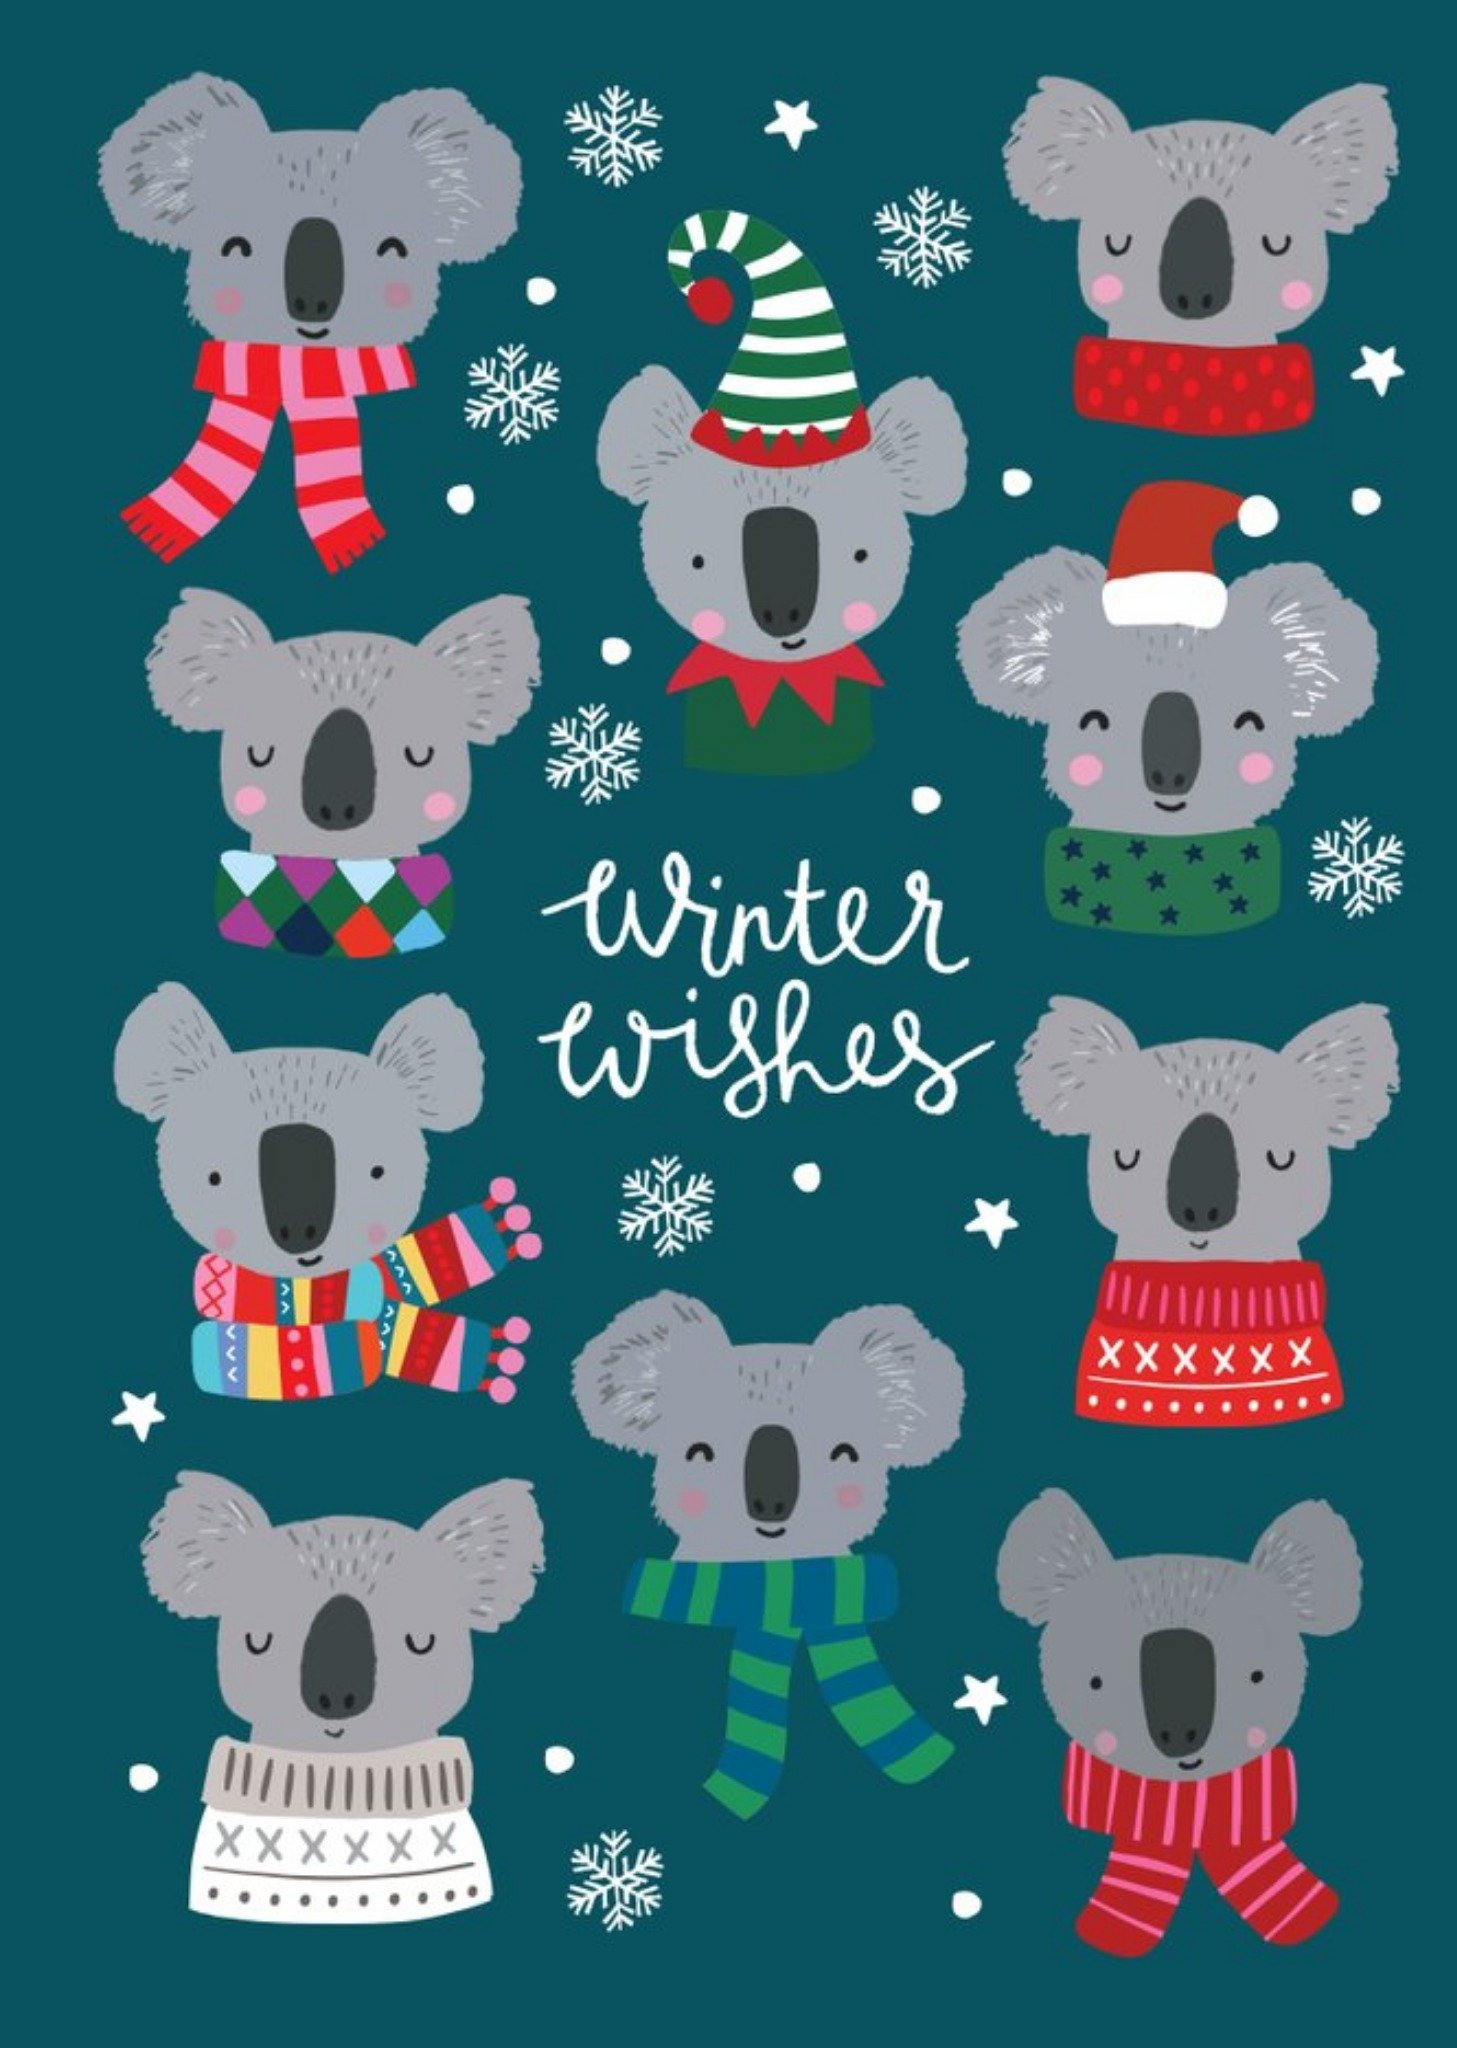 Moonpig Cute Illustrated Koalas Snowflake Winter Wishes Card Ecard